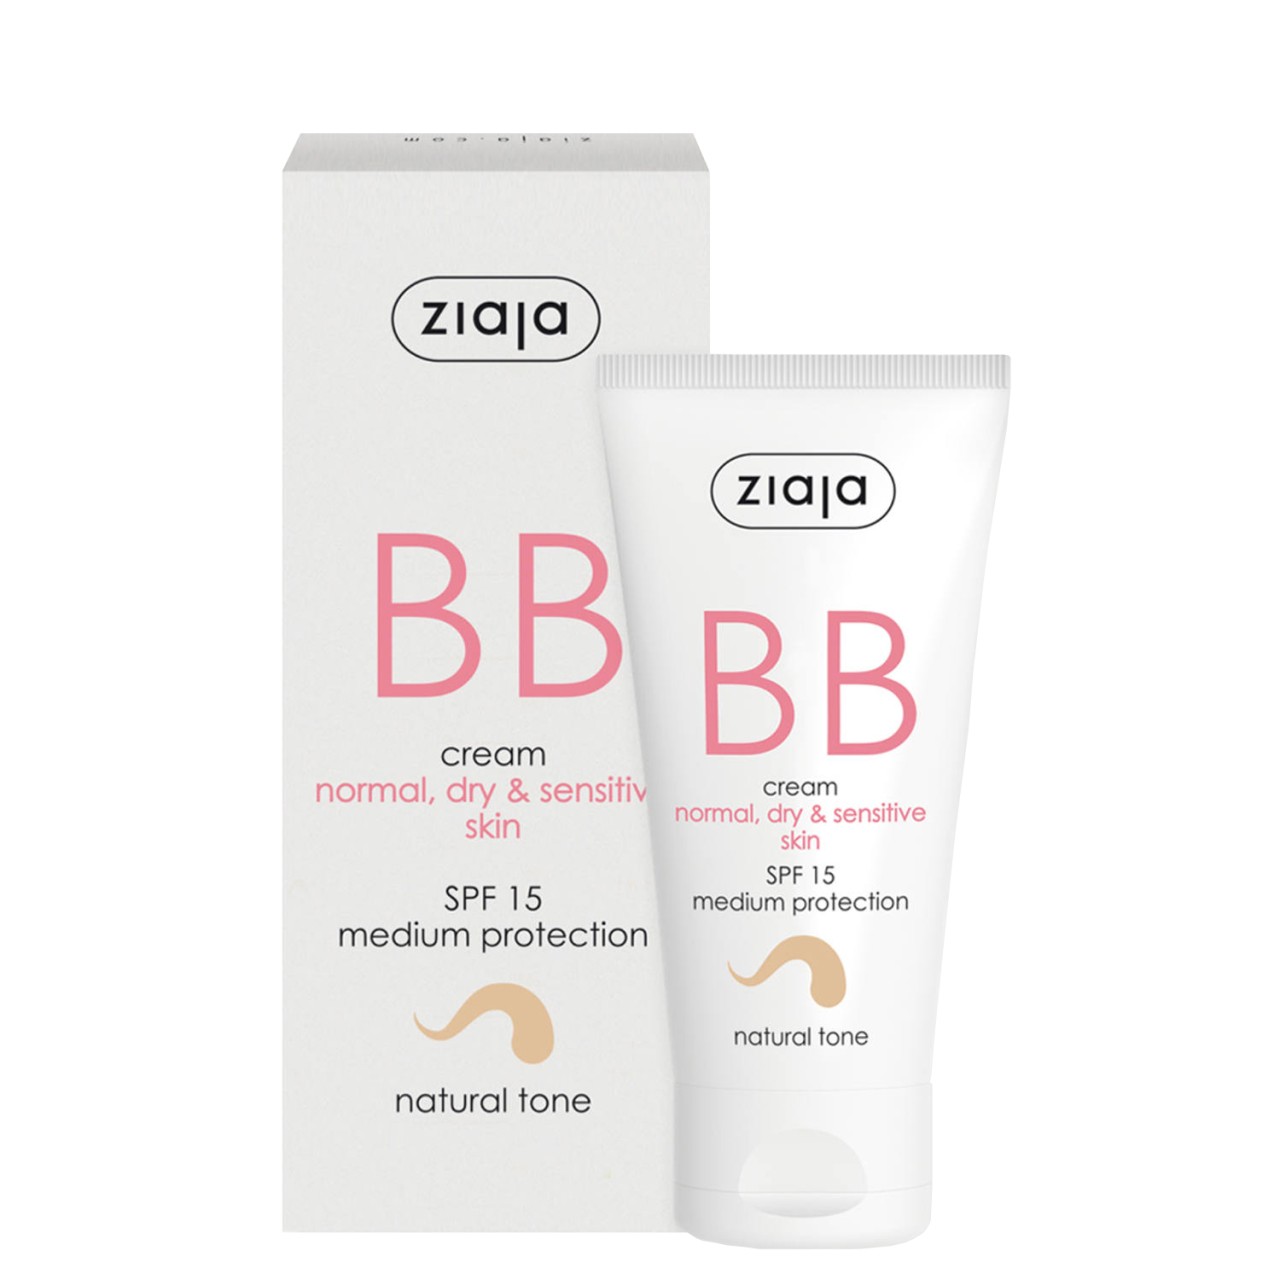 Ziaja BB Cream SPF15 For Normal/Dry/Sensitive Skin - Natural Tone